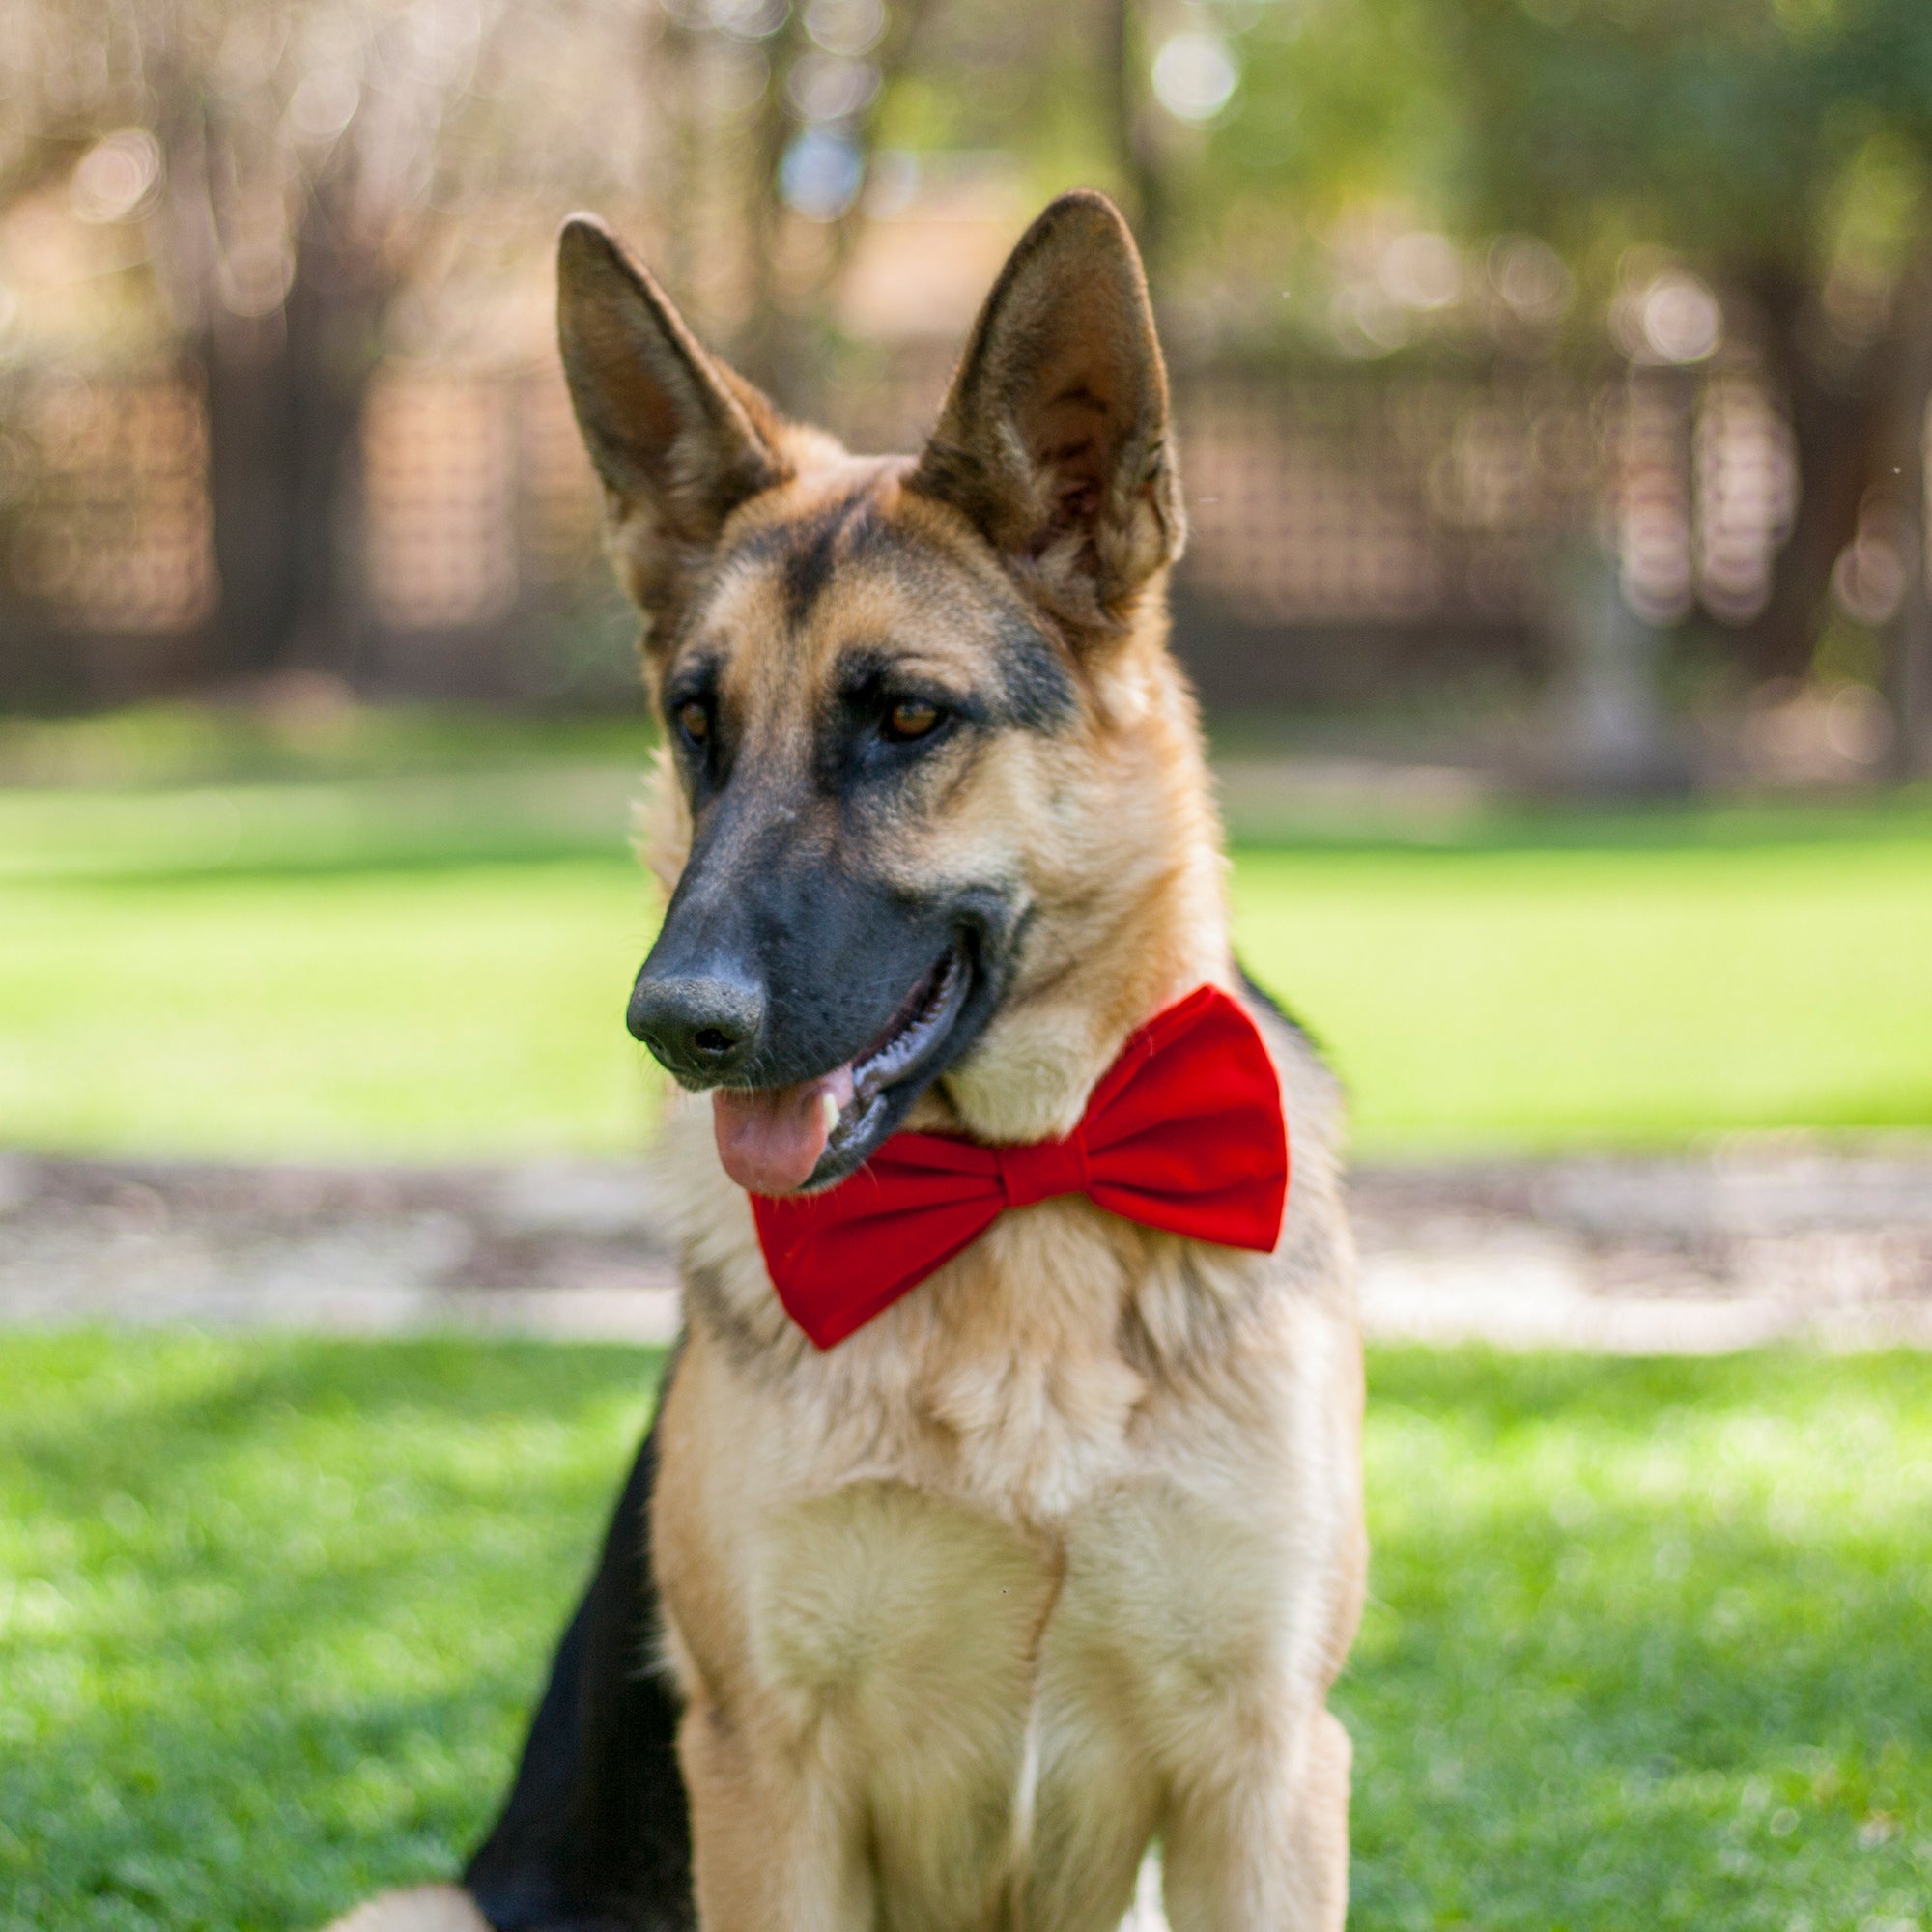 Collar de Corbata de Moño Floral para Perro de Jack Pet Style